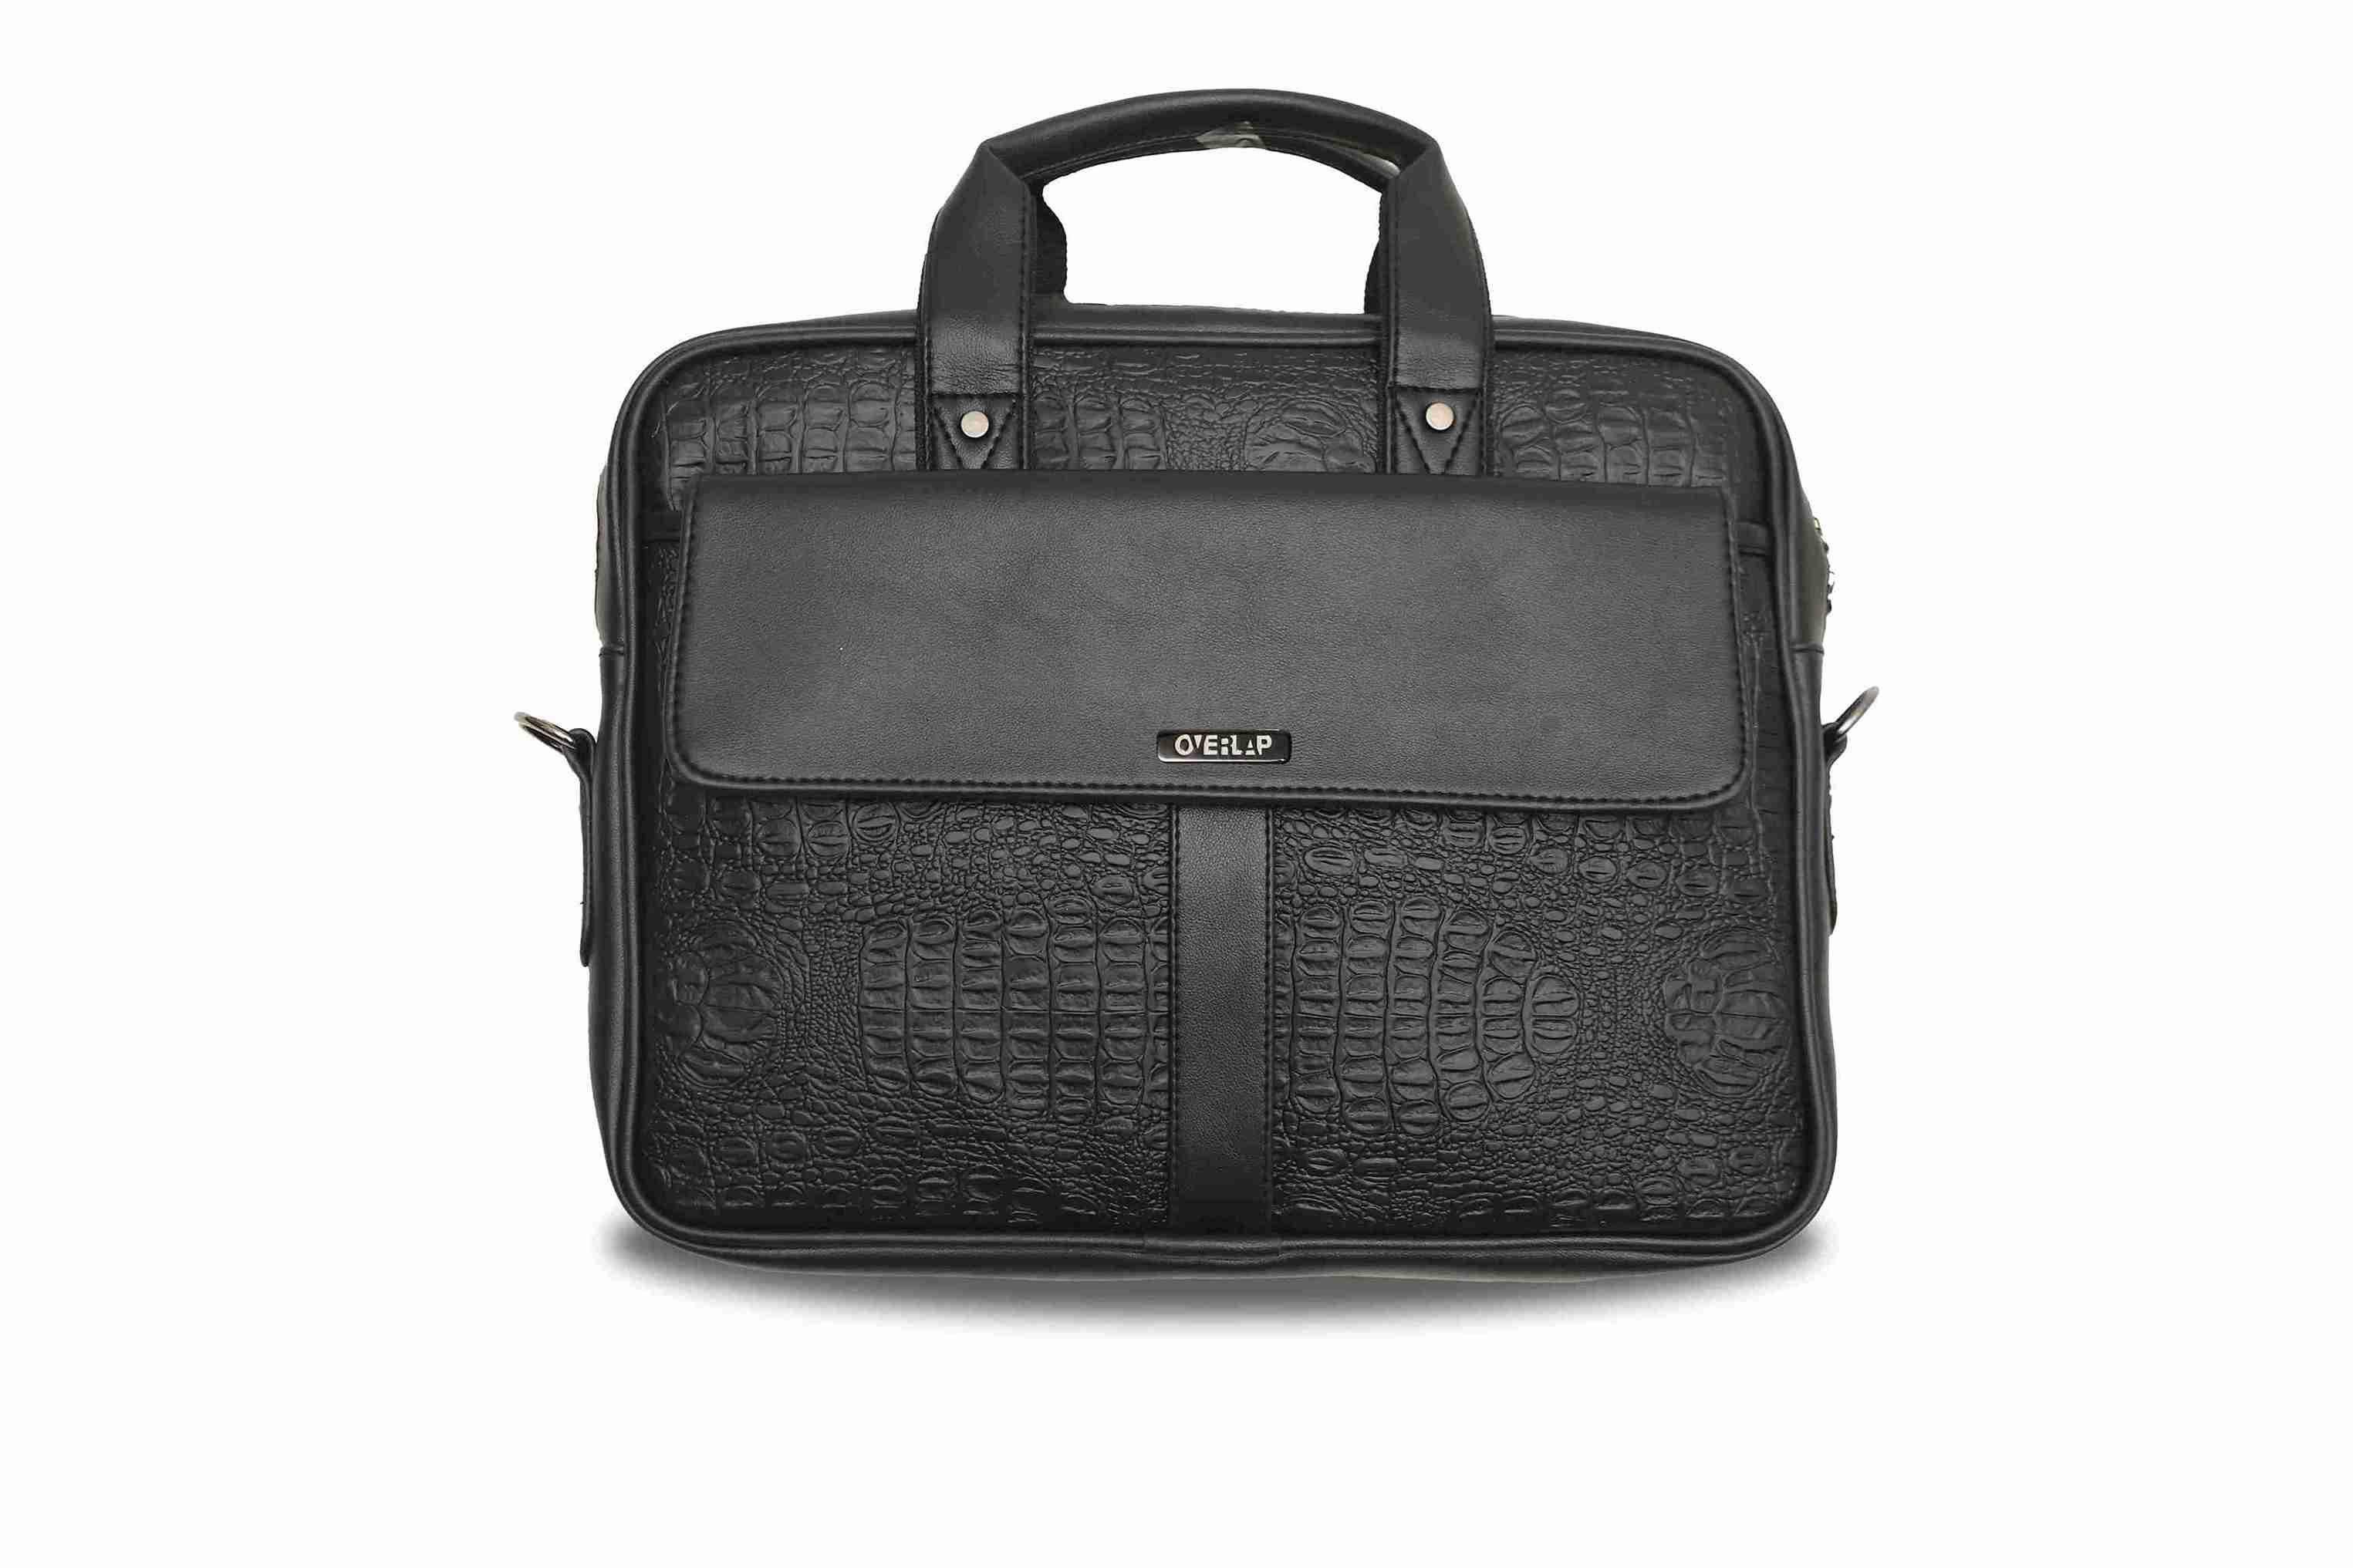 Unleash Luxury: Discover Crocodial 001 - The Definitive Genuine Leather Laptop Bag